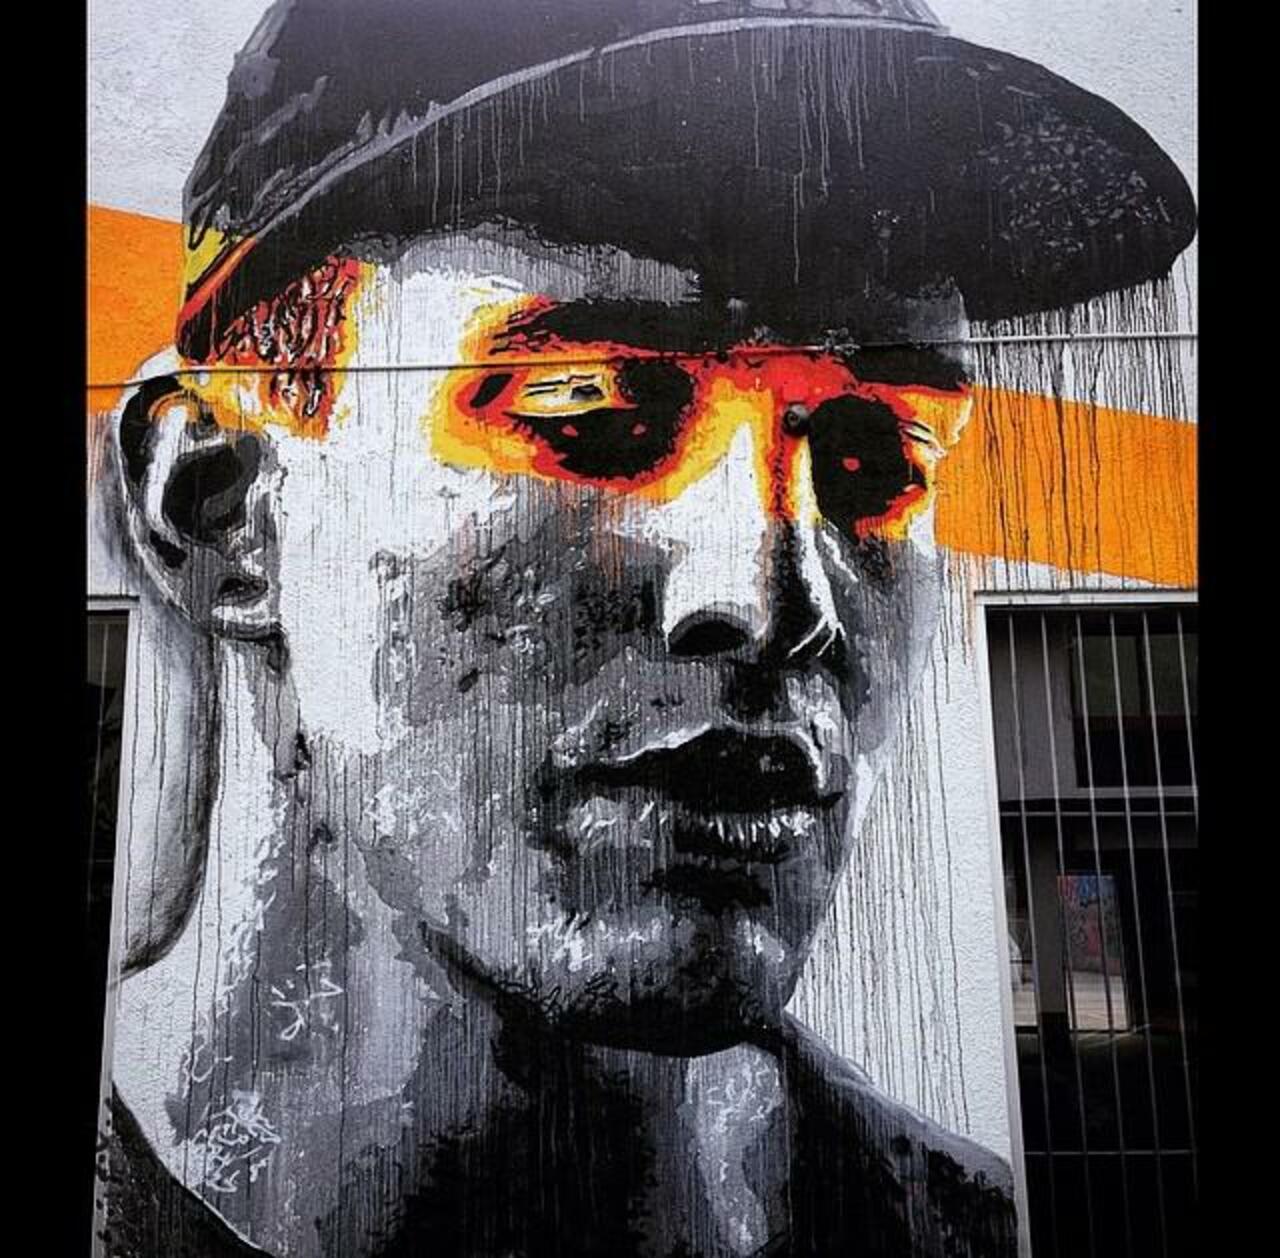 RT @ShainaDelRey: Artist Nils Westergard Street Art portrait in Miami 

#art #graffiti #mural #streetart http://t.co/ba17pOAzfE